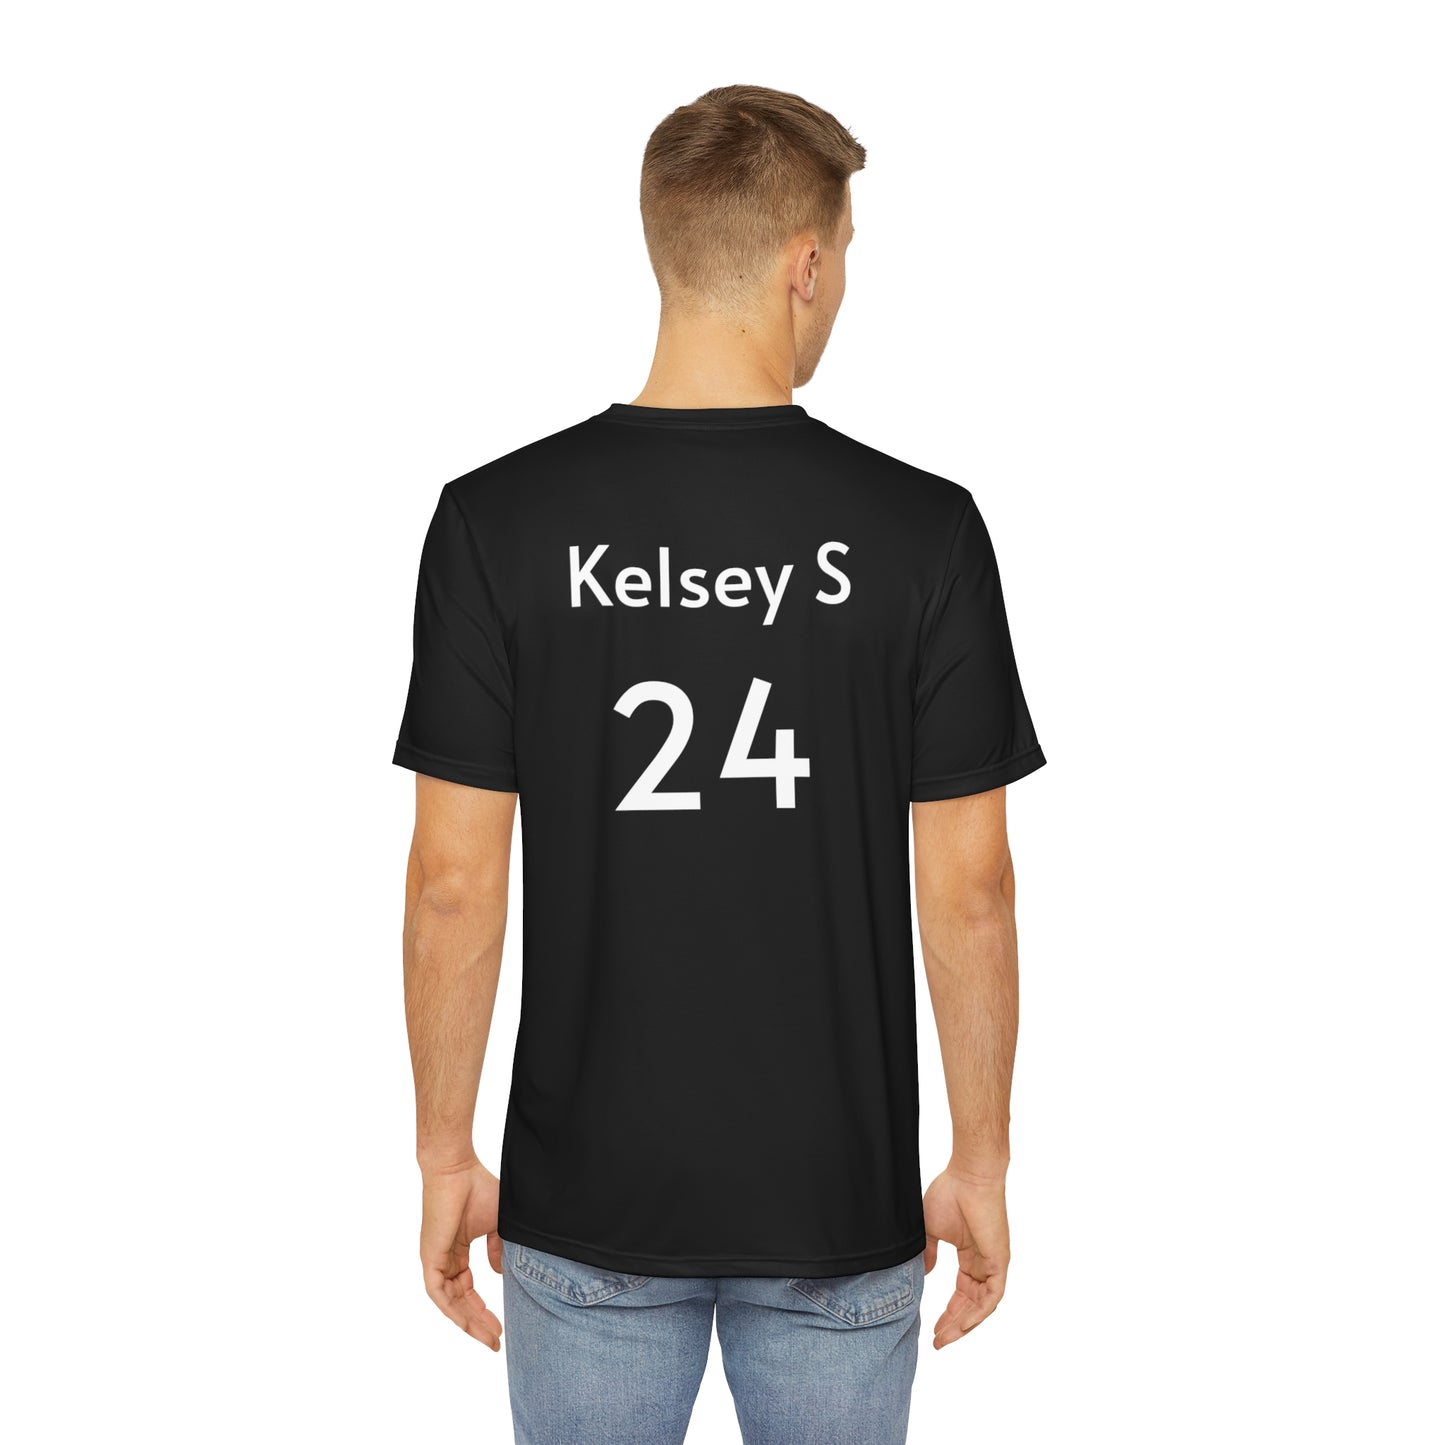 Kelsey s Team shirt